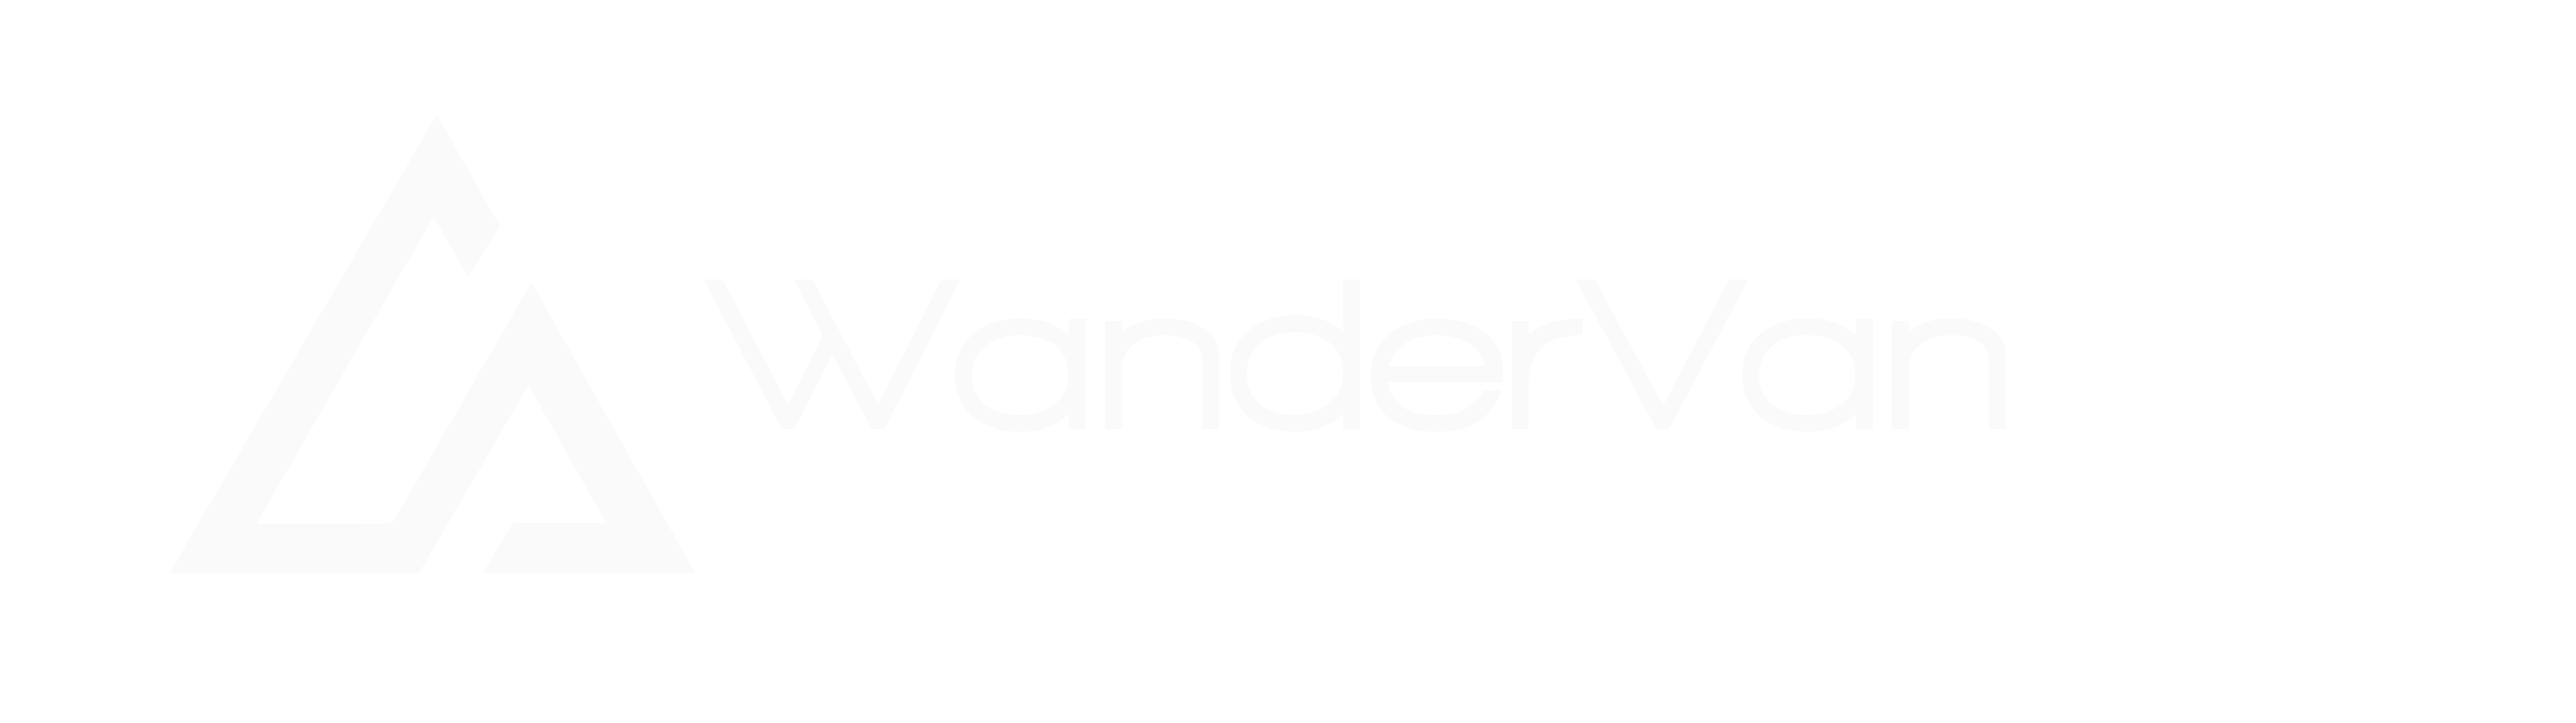 Wanderer66